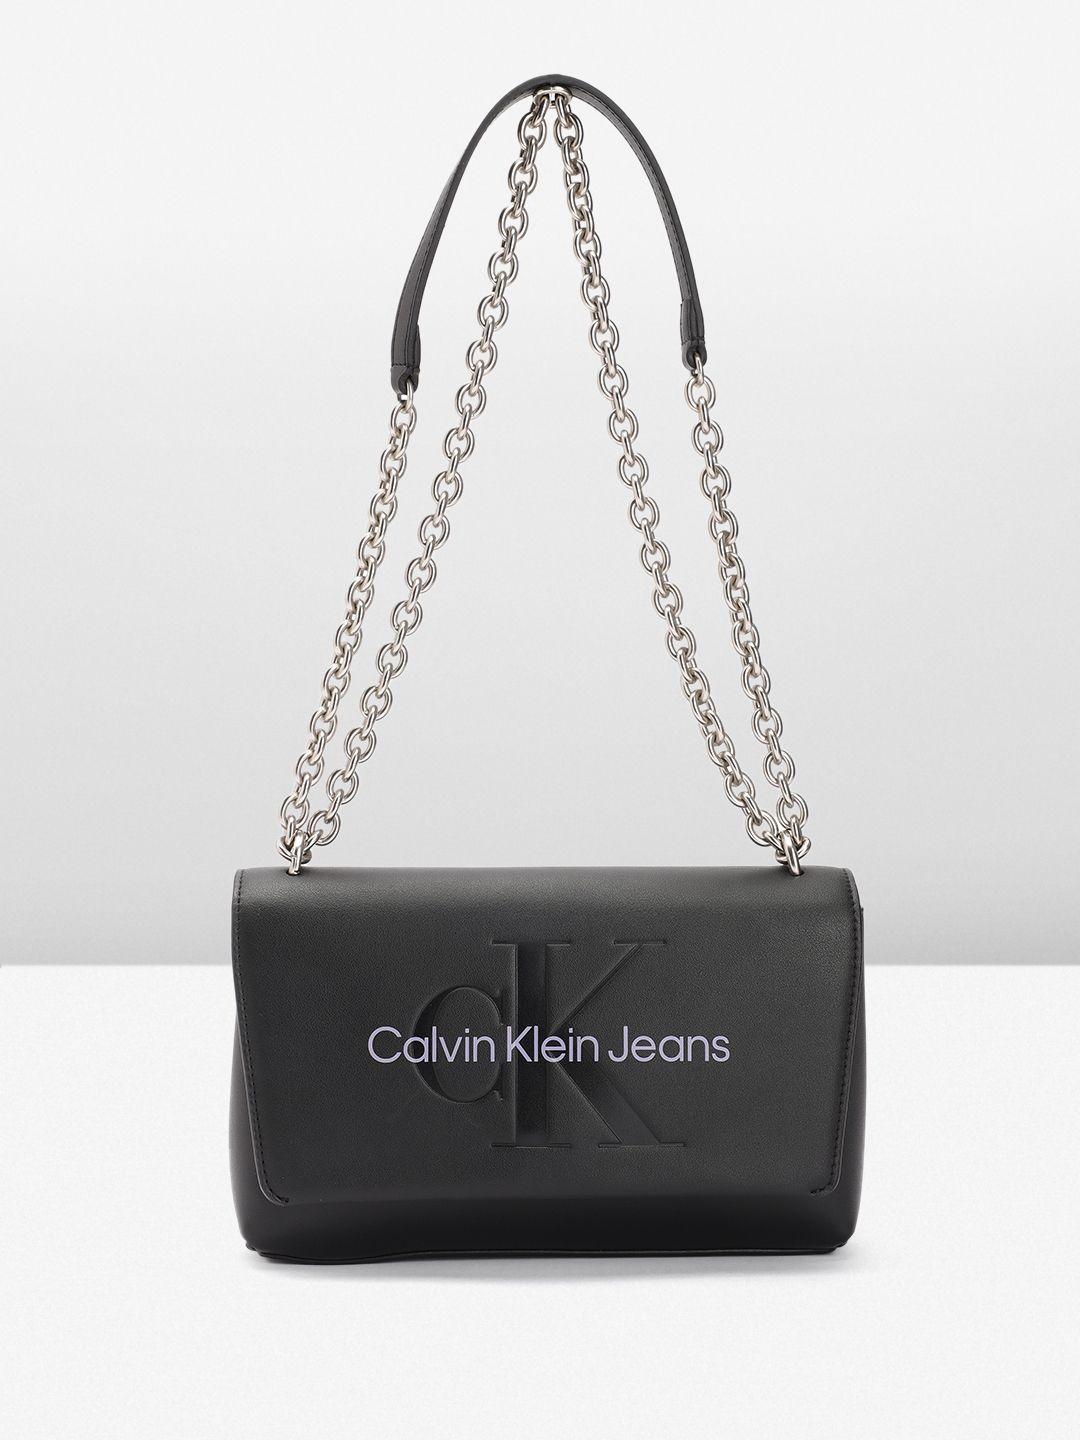 calvin klein brand logo debossed & printed pu structured shoulder bag